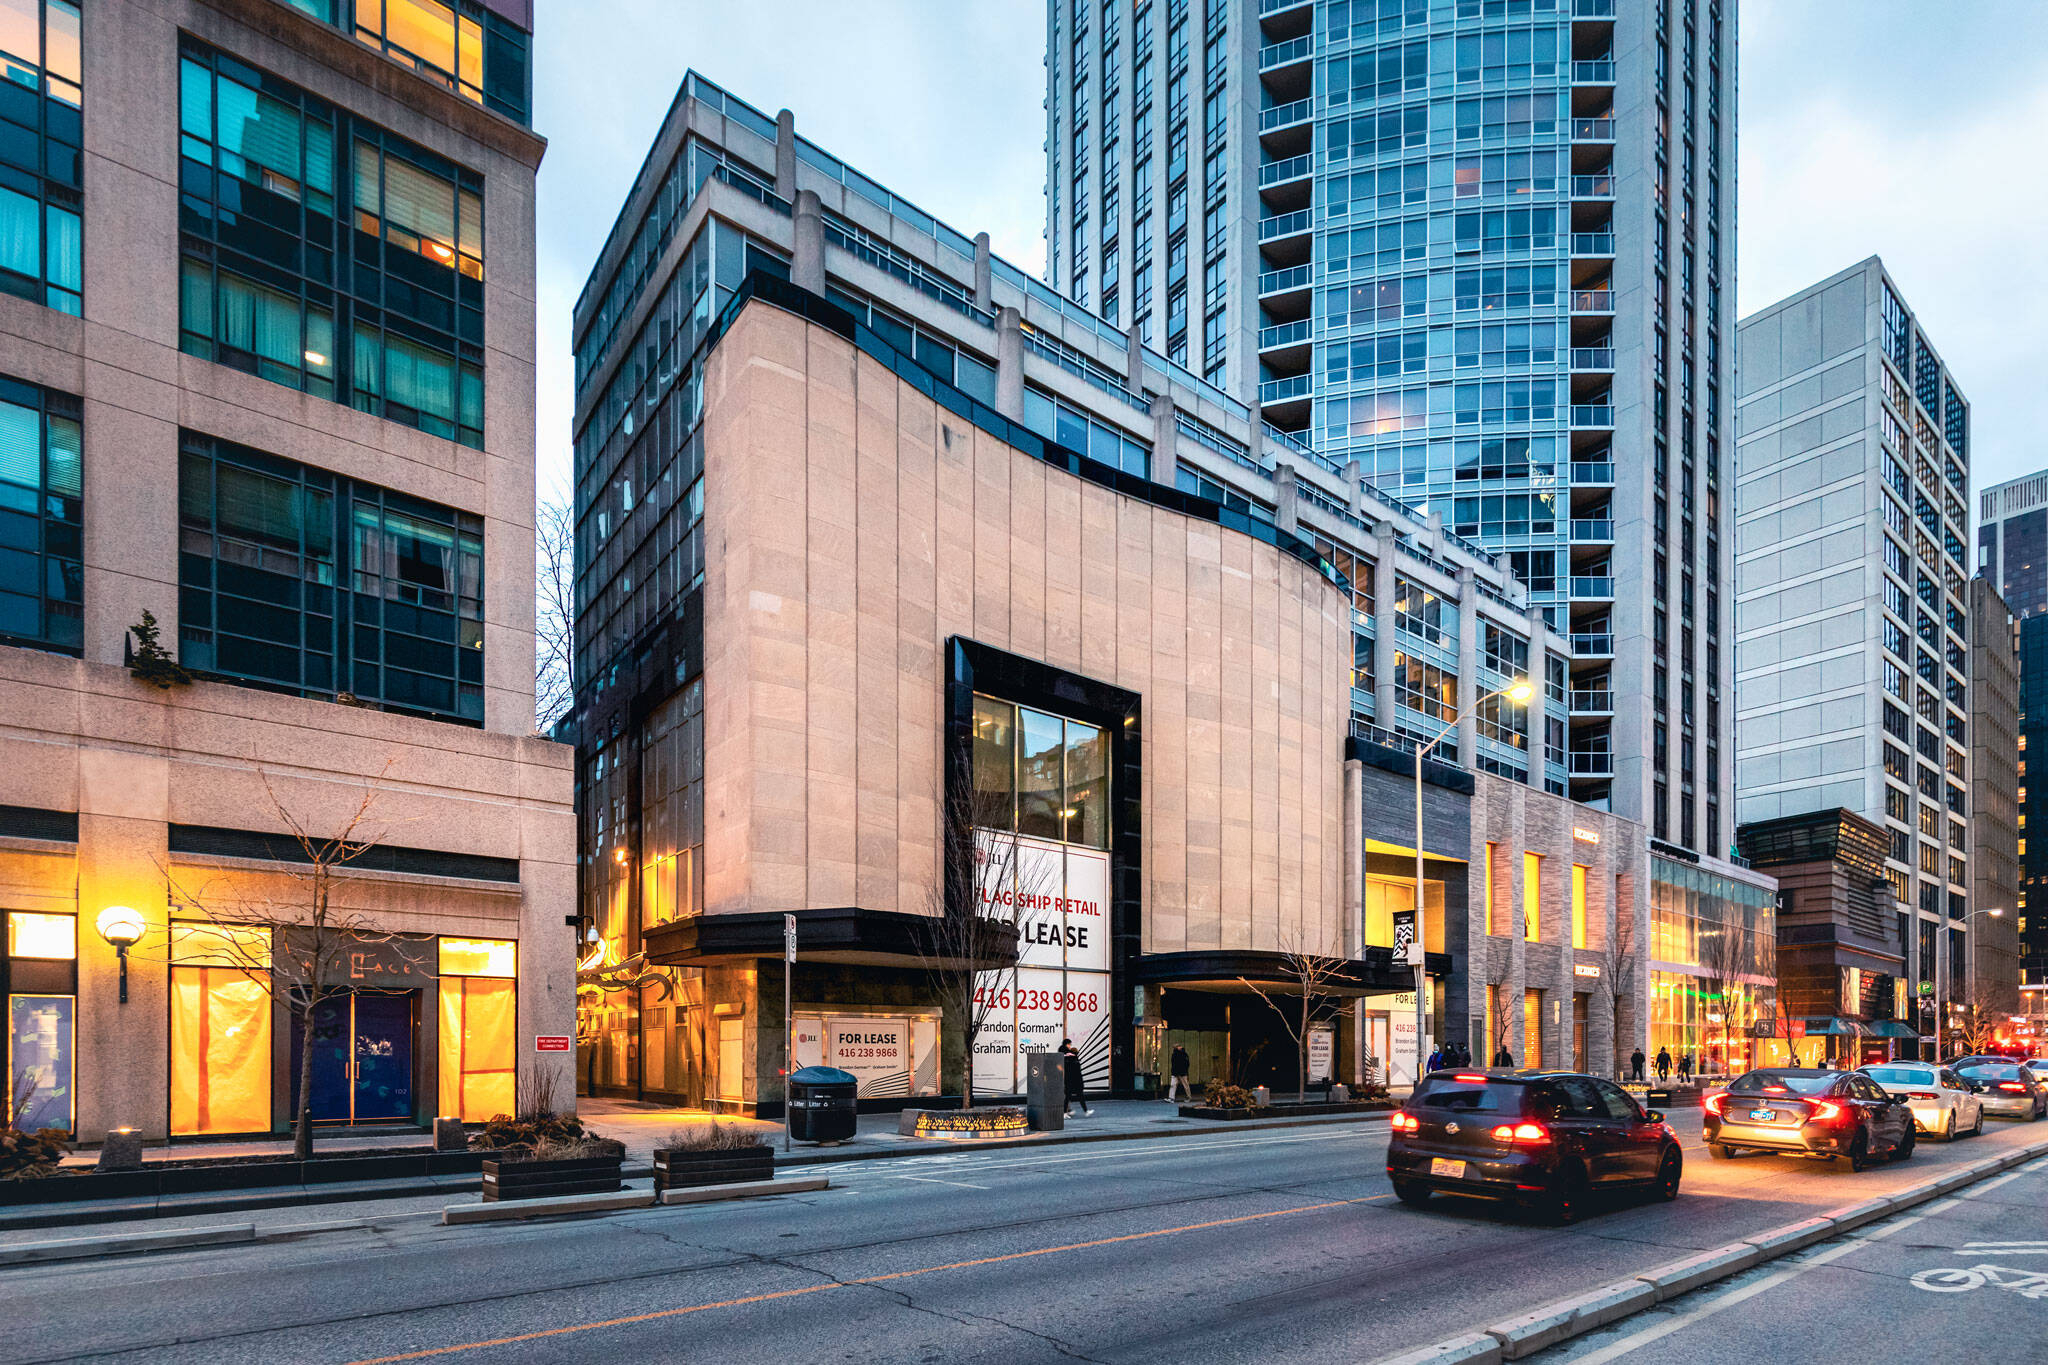 Retail space behind majestic Toronto theatre facade has sat vacant